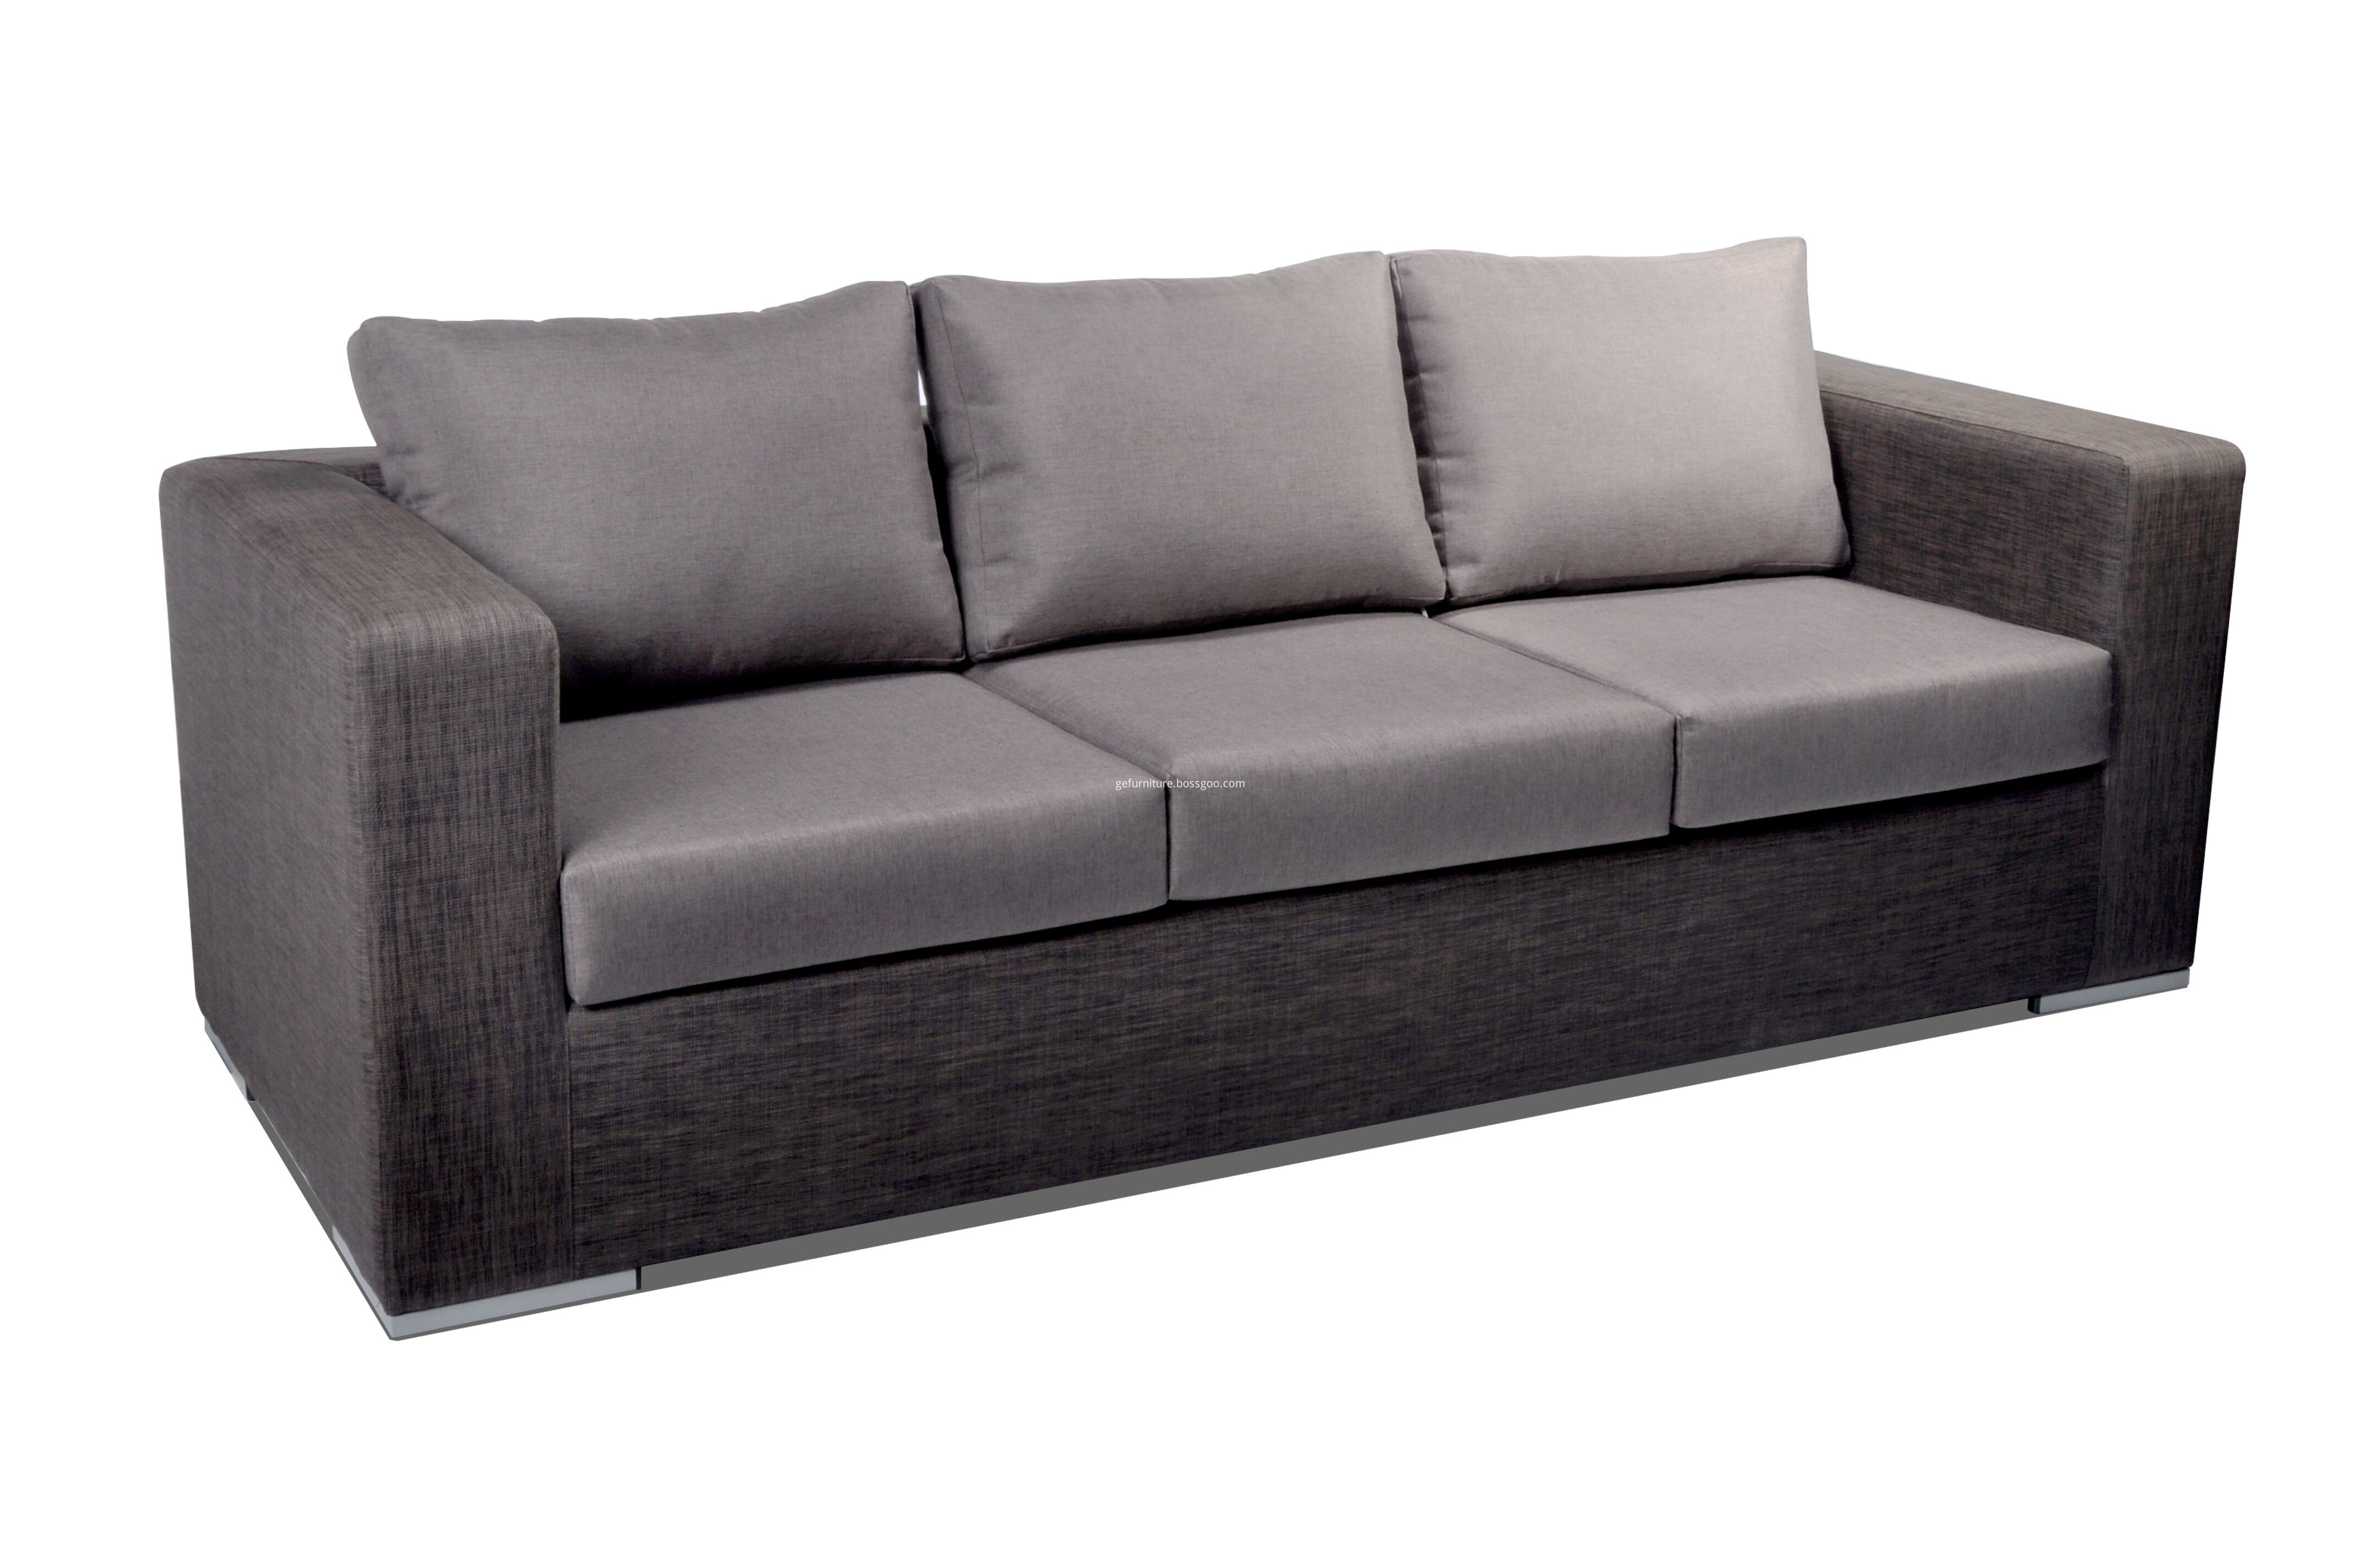 luxury outdoor sofa